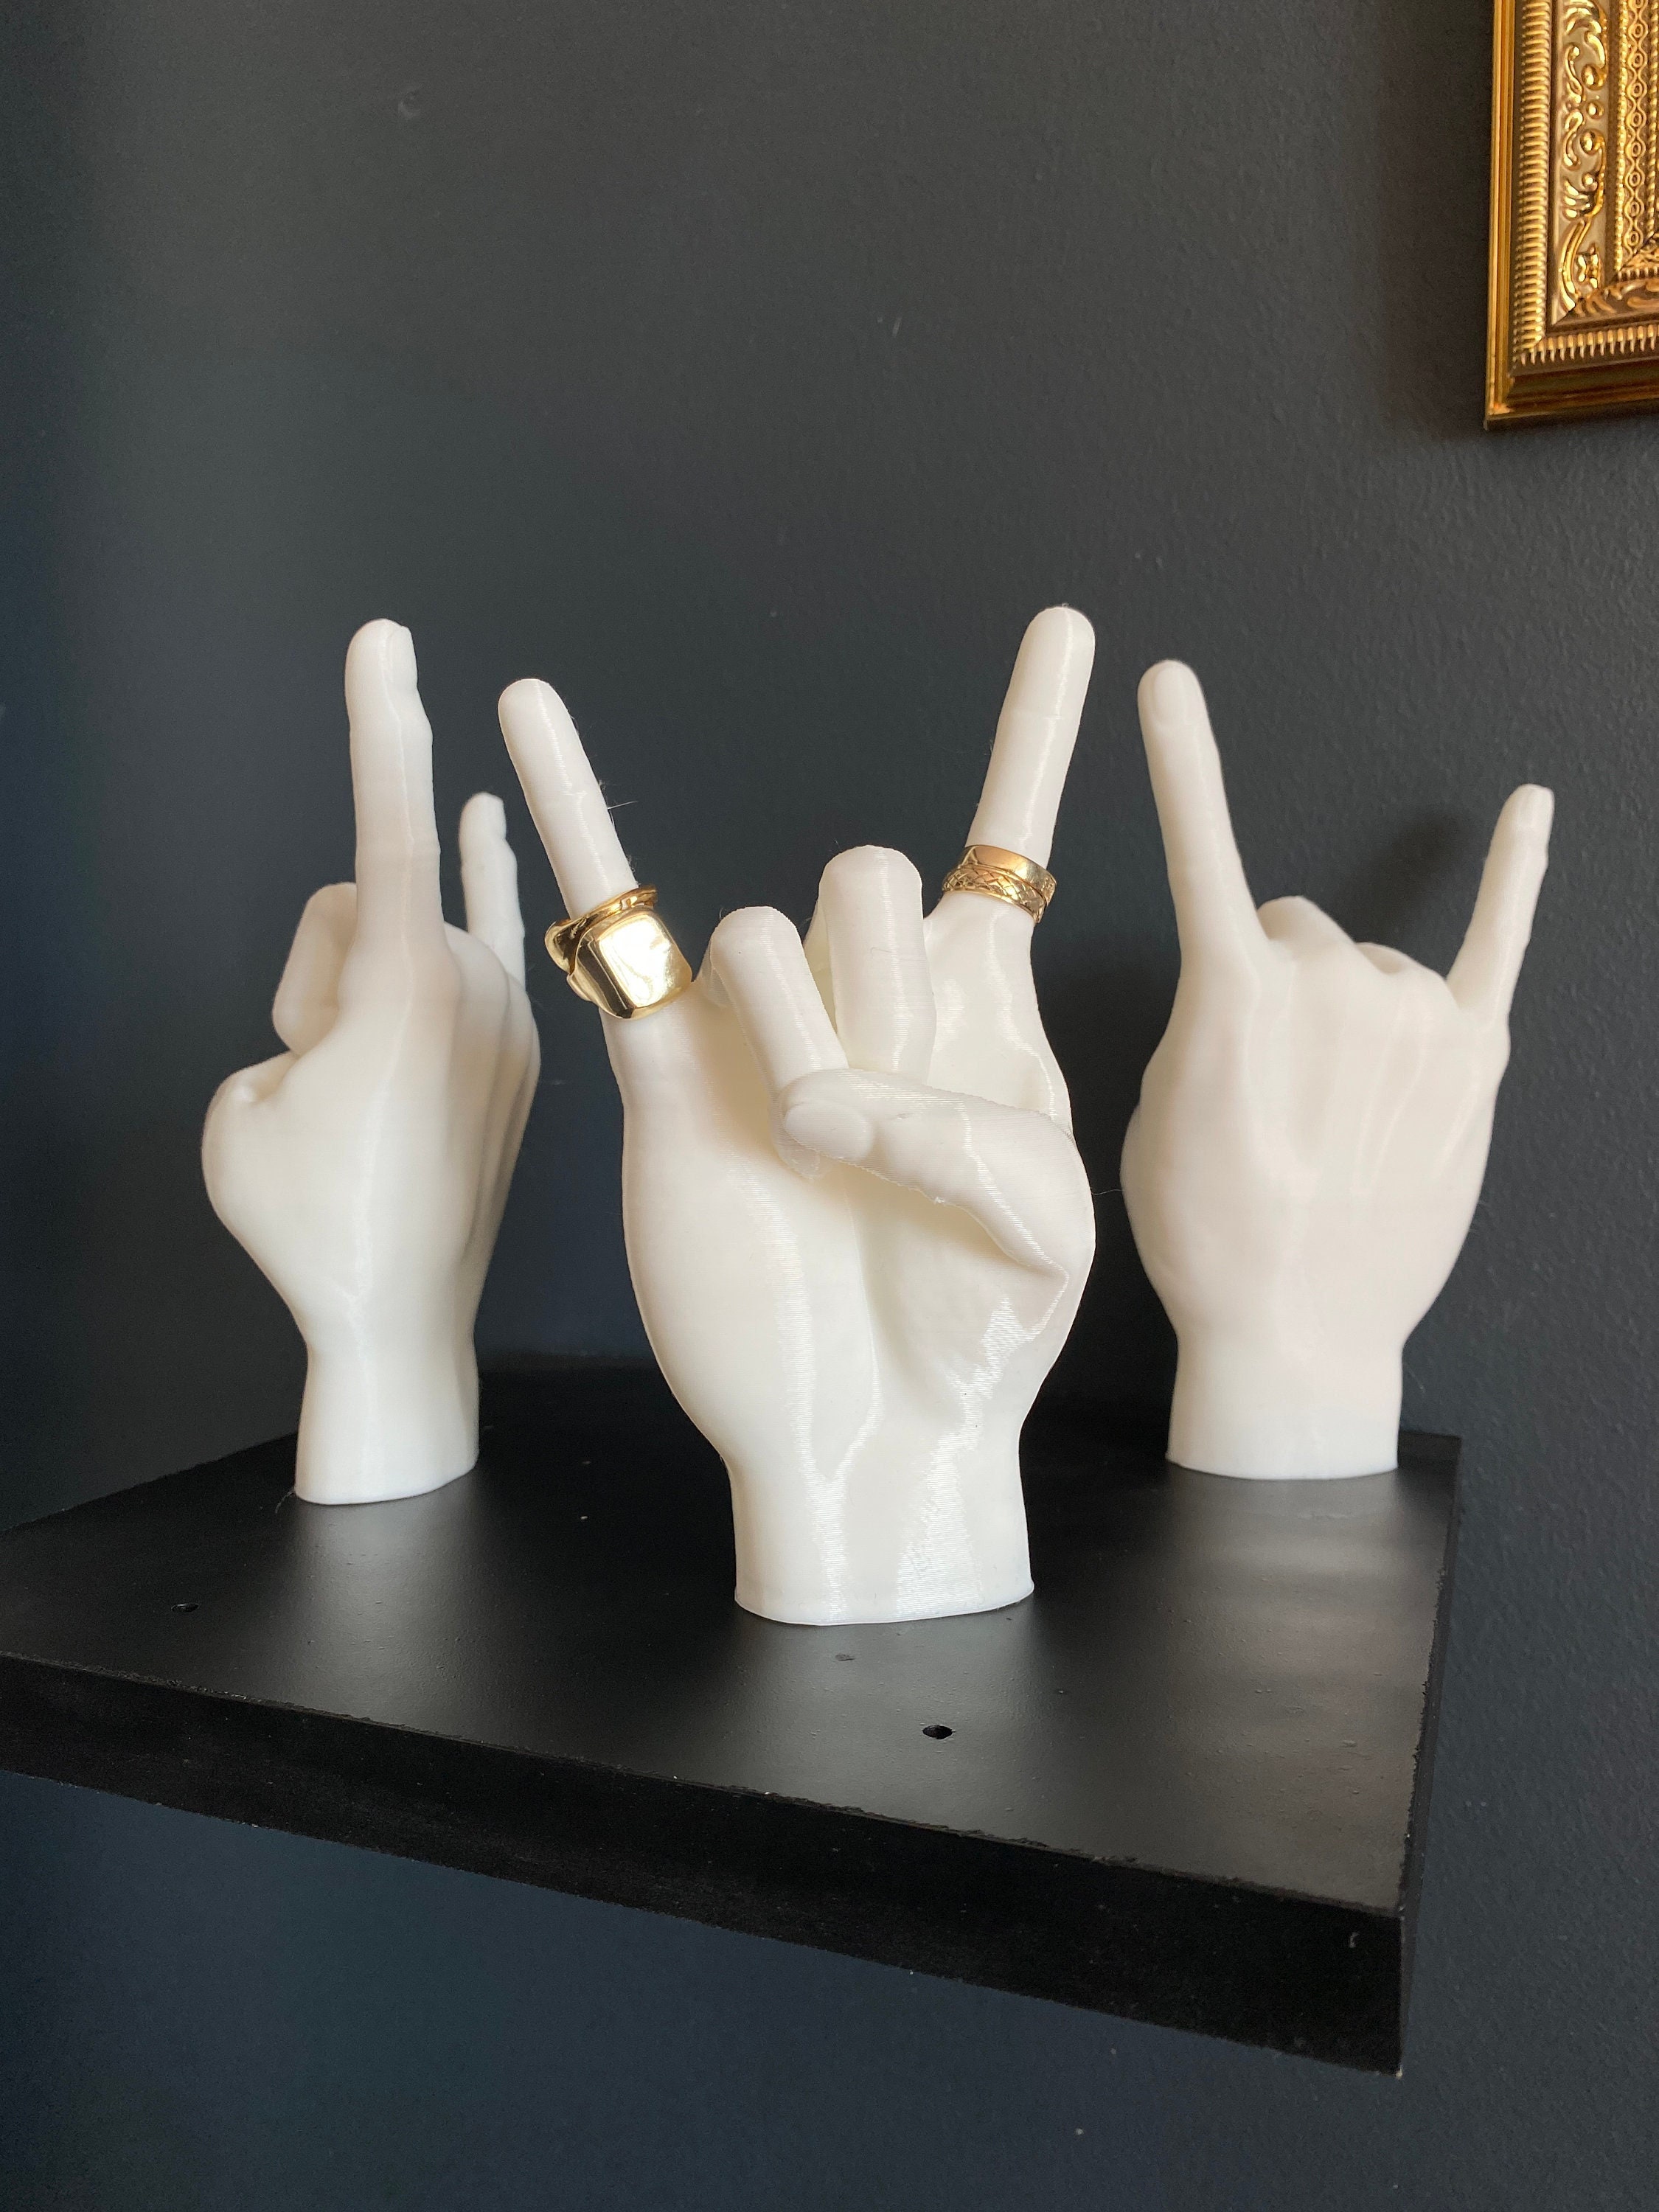 Vintage Hand Reproduction Handmade Ceramic Ring Holder Jewelry Display 